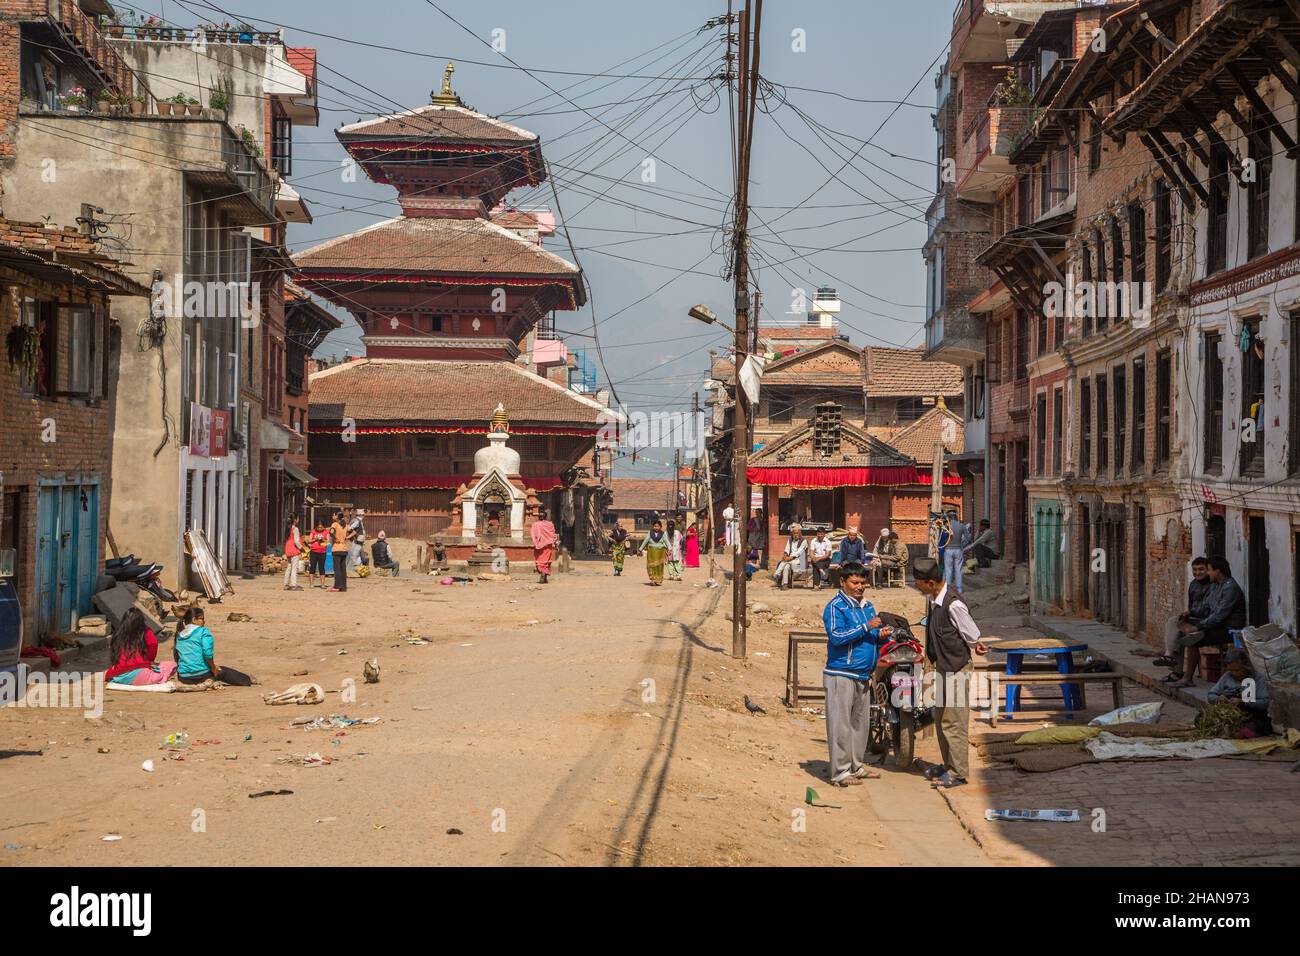 Straßenszene mit einem Hindu-Tempel im mittelalterlichen Newar-Dorf Khokana im Kathmandu-Tal von Nepal. Stockfoto